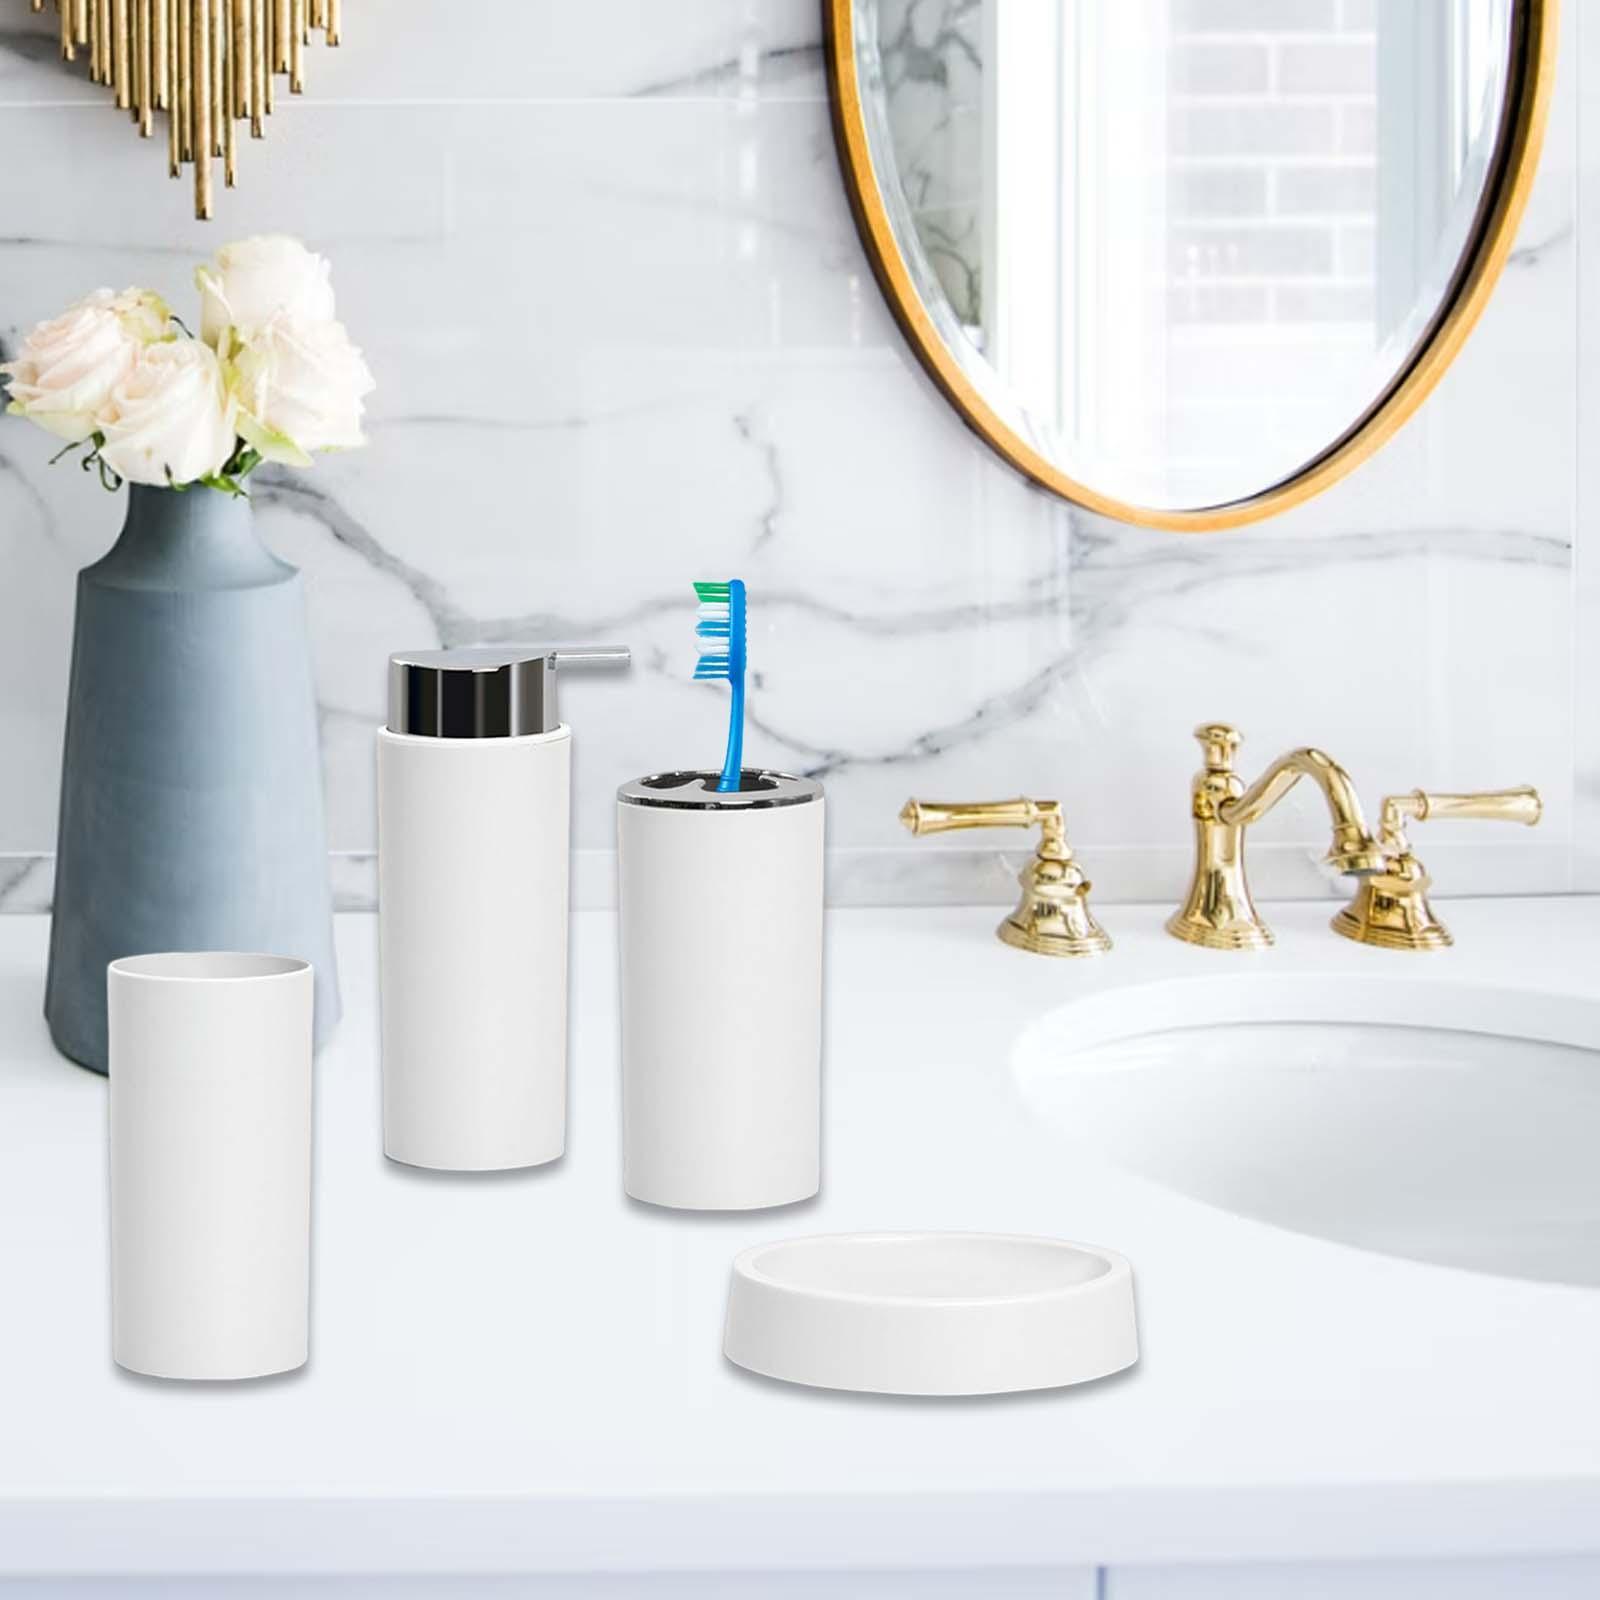 4 Pieces Plastic Bathroom Accessories Set for Countertop Bathroom Toilet